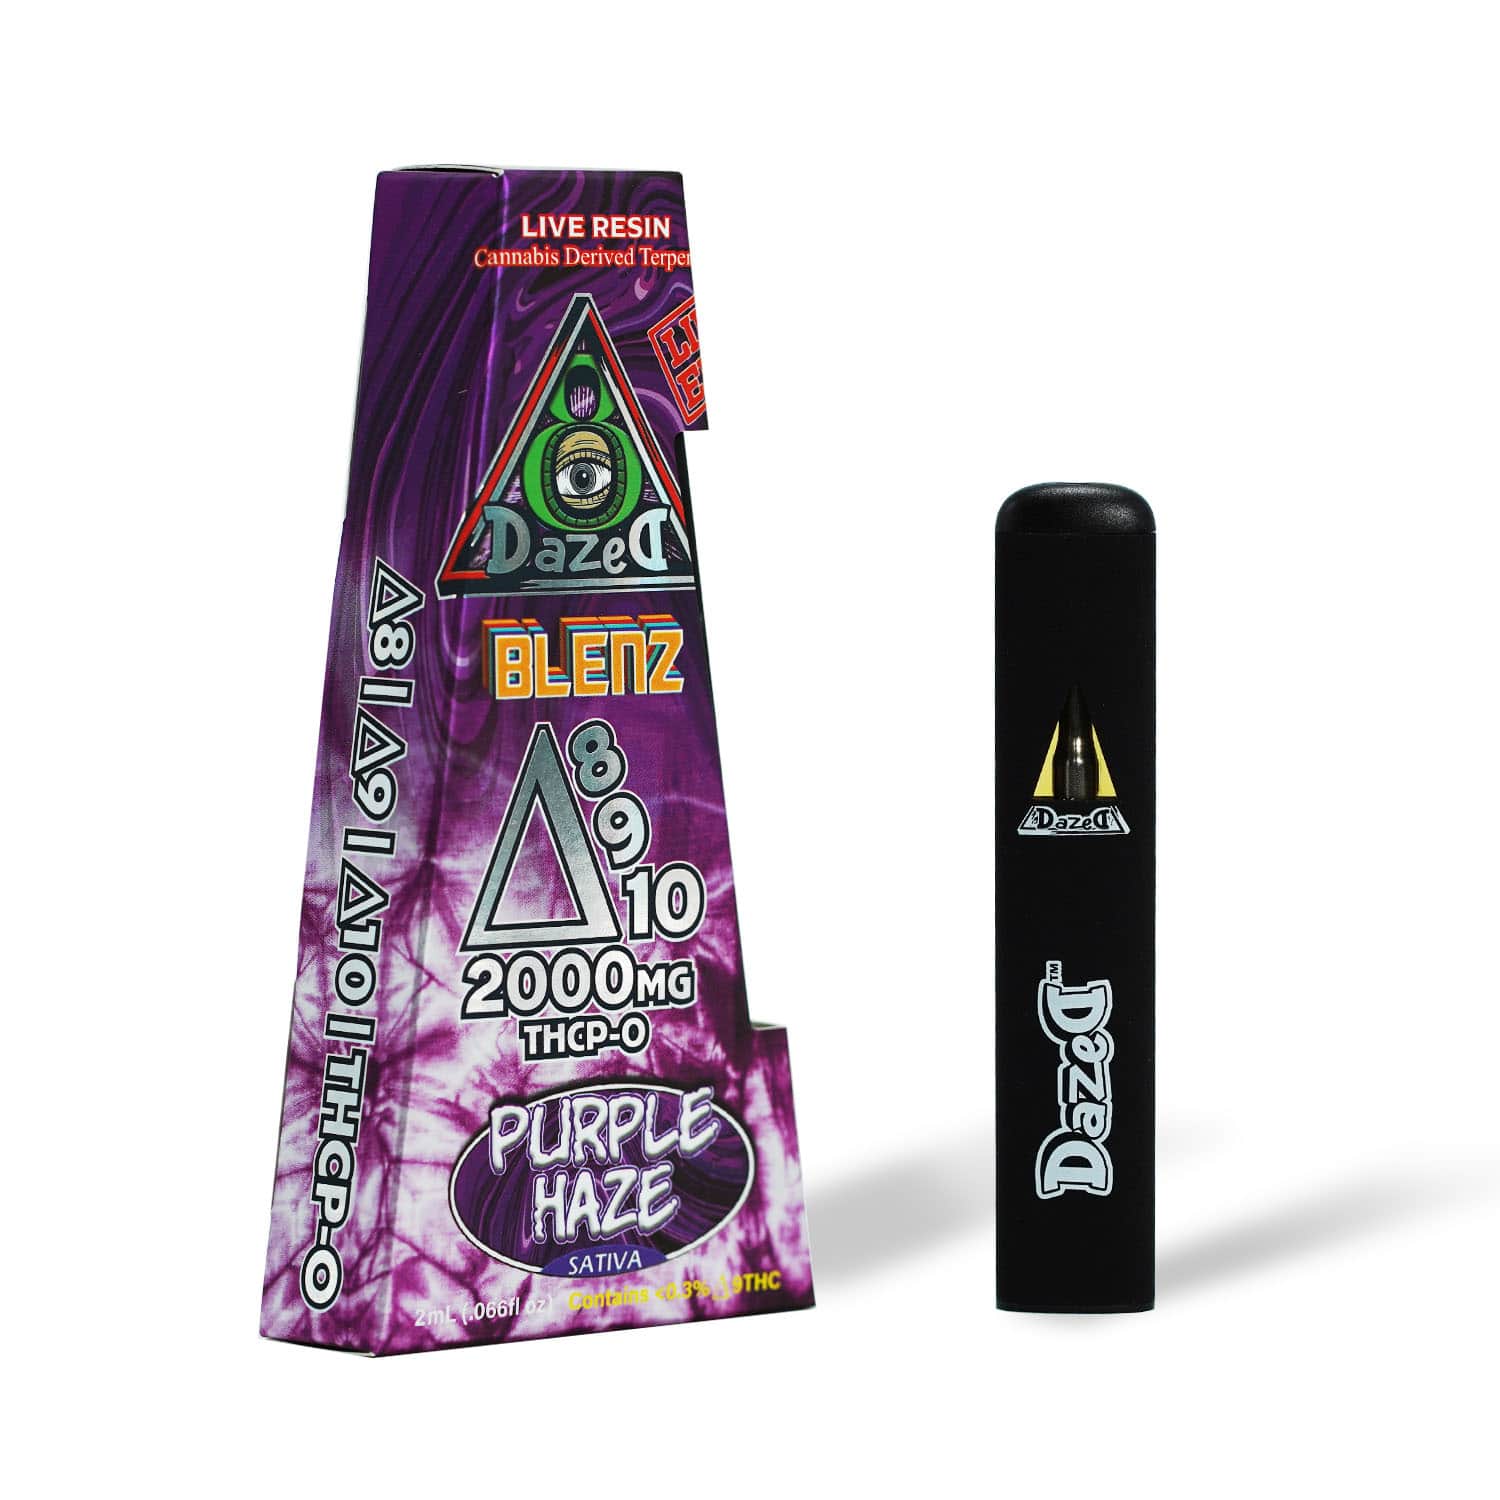 DazeD8 Purple Haze D8 + D9 + D10 + THCP-O Live Resin Disposable (2g) Best Price